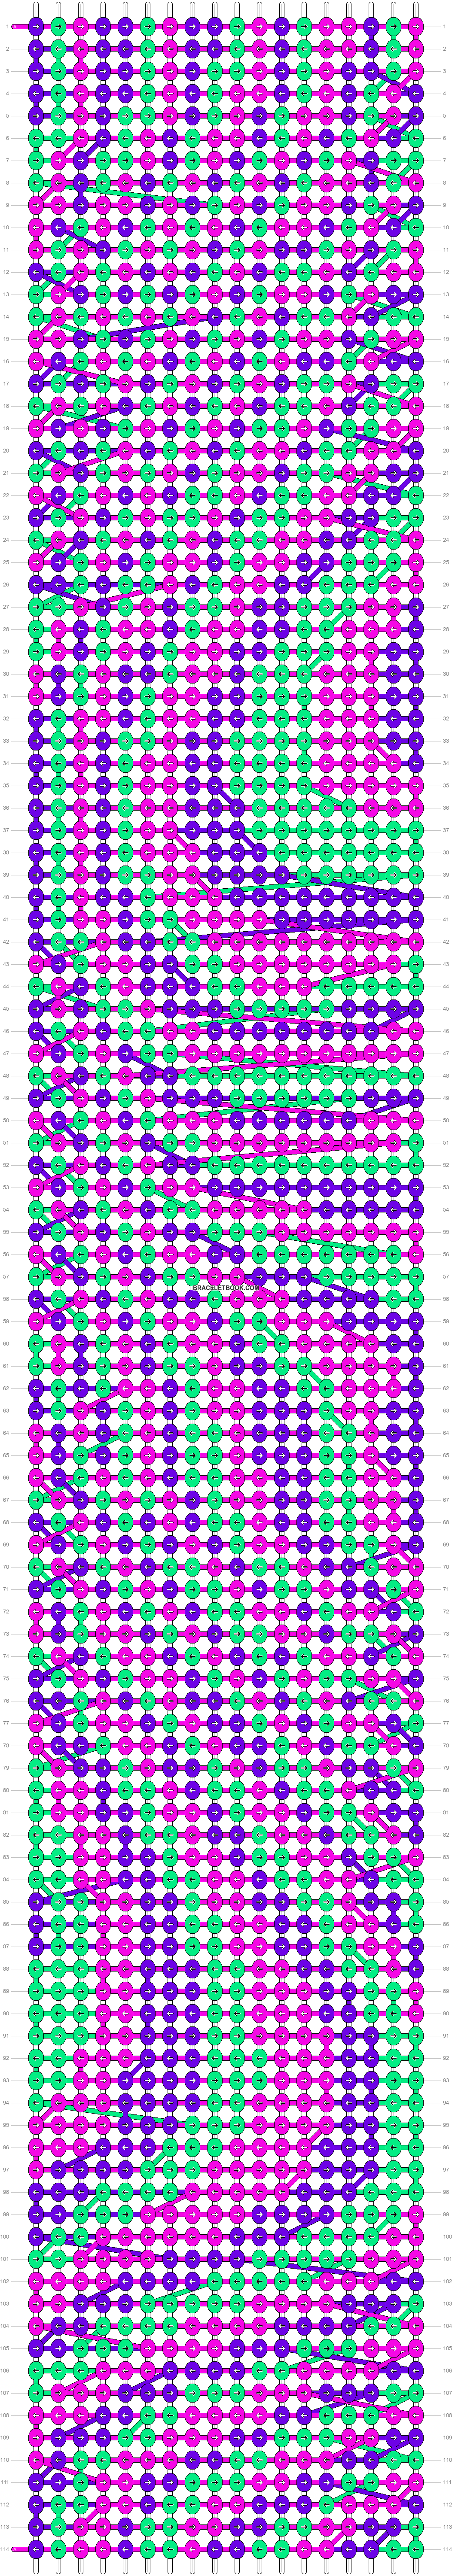 Alpha pattern #80832 variation #147182 pattern